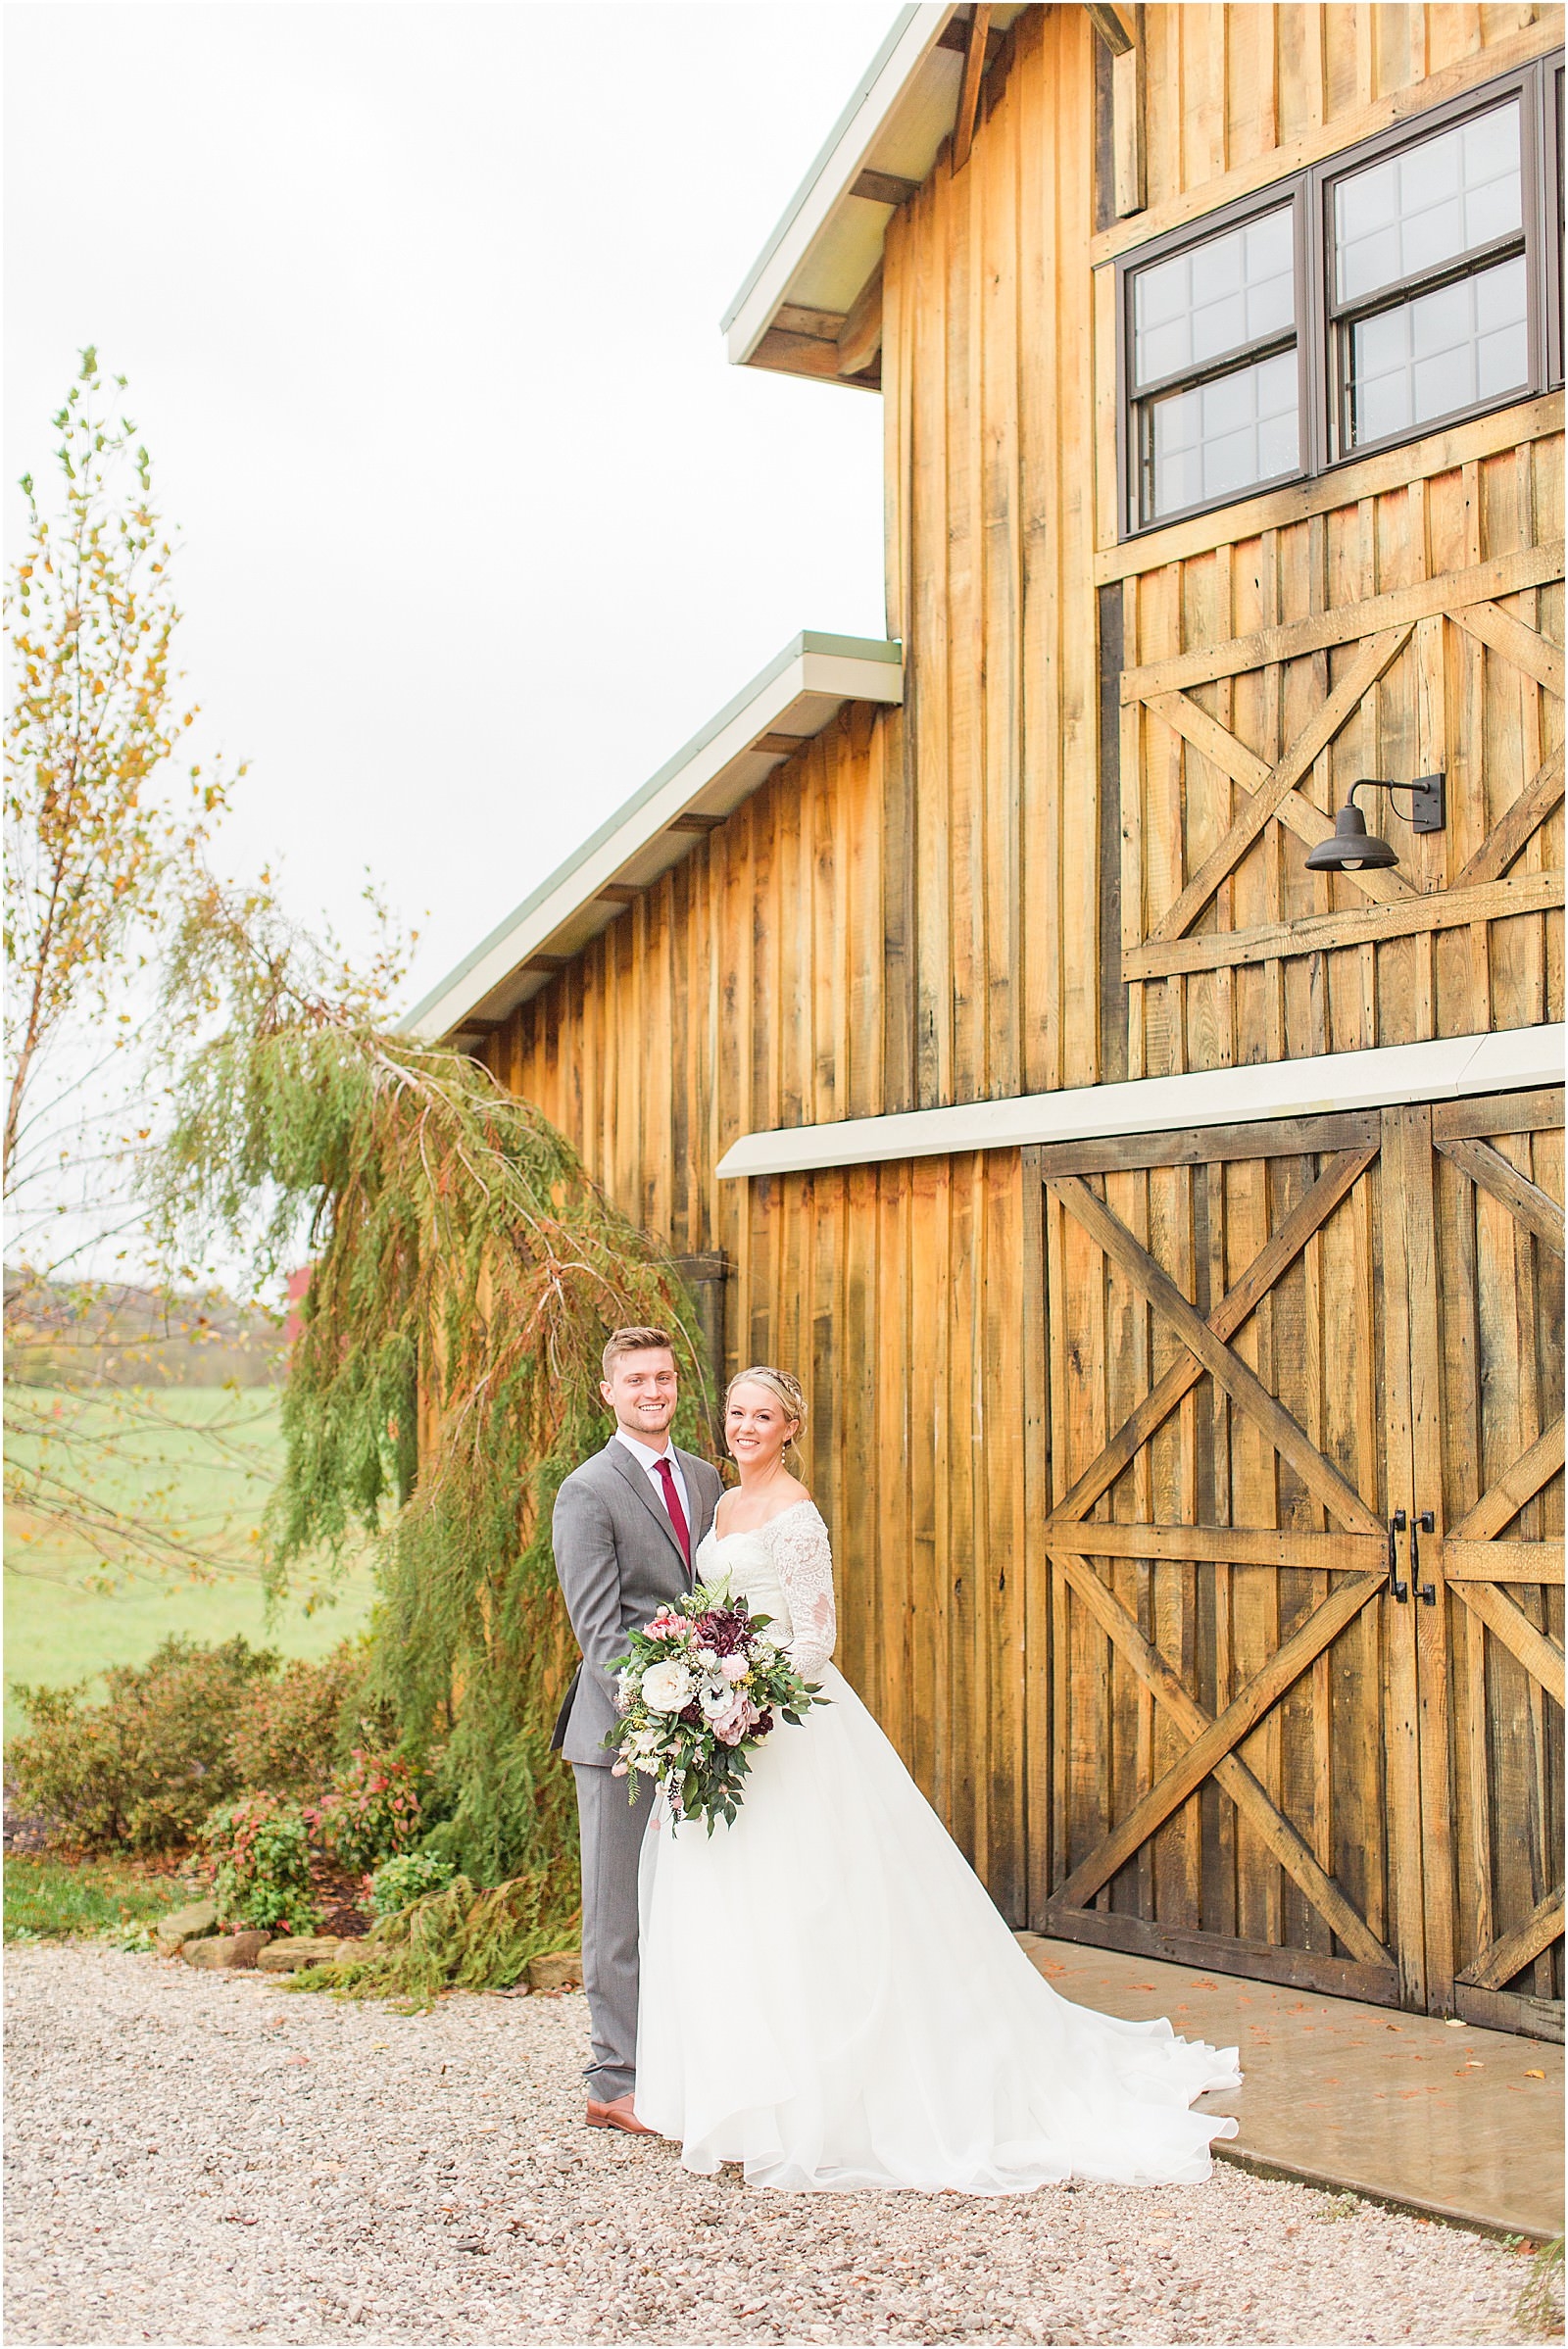 A Rainy Corner House Wedding | Rachel and Nick | Bret and Brandie Photography 0045.jpg